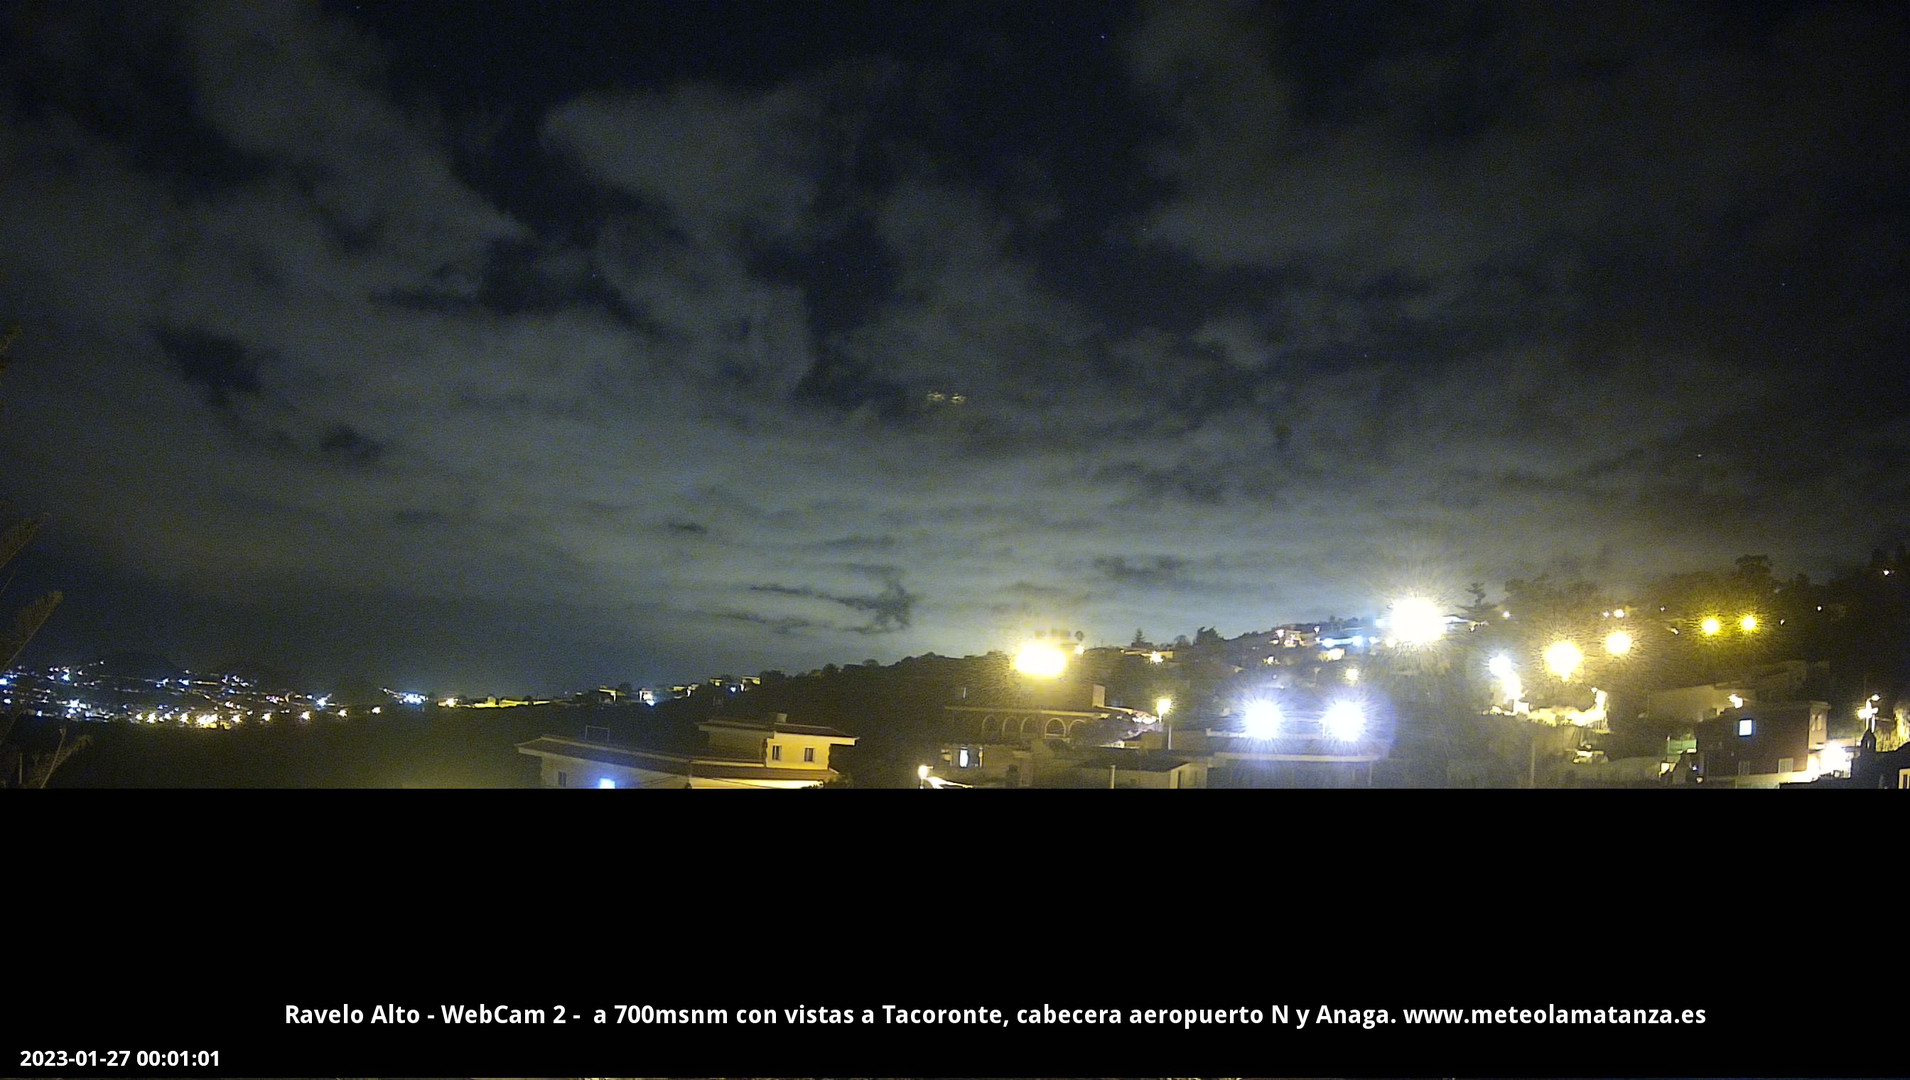 time-lapse frame, Ravelo, visión E-SE, 428msnm webcam